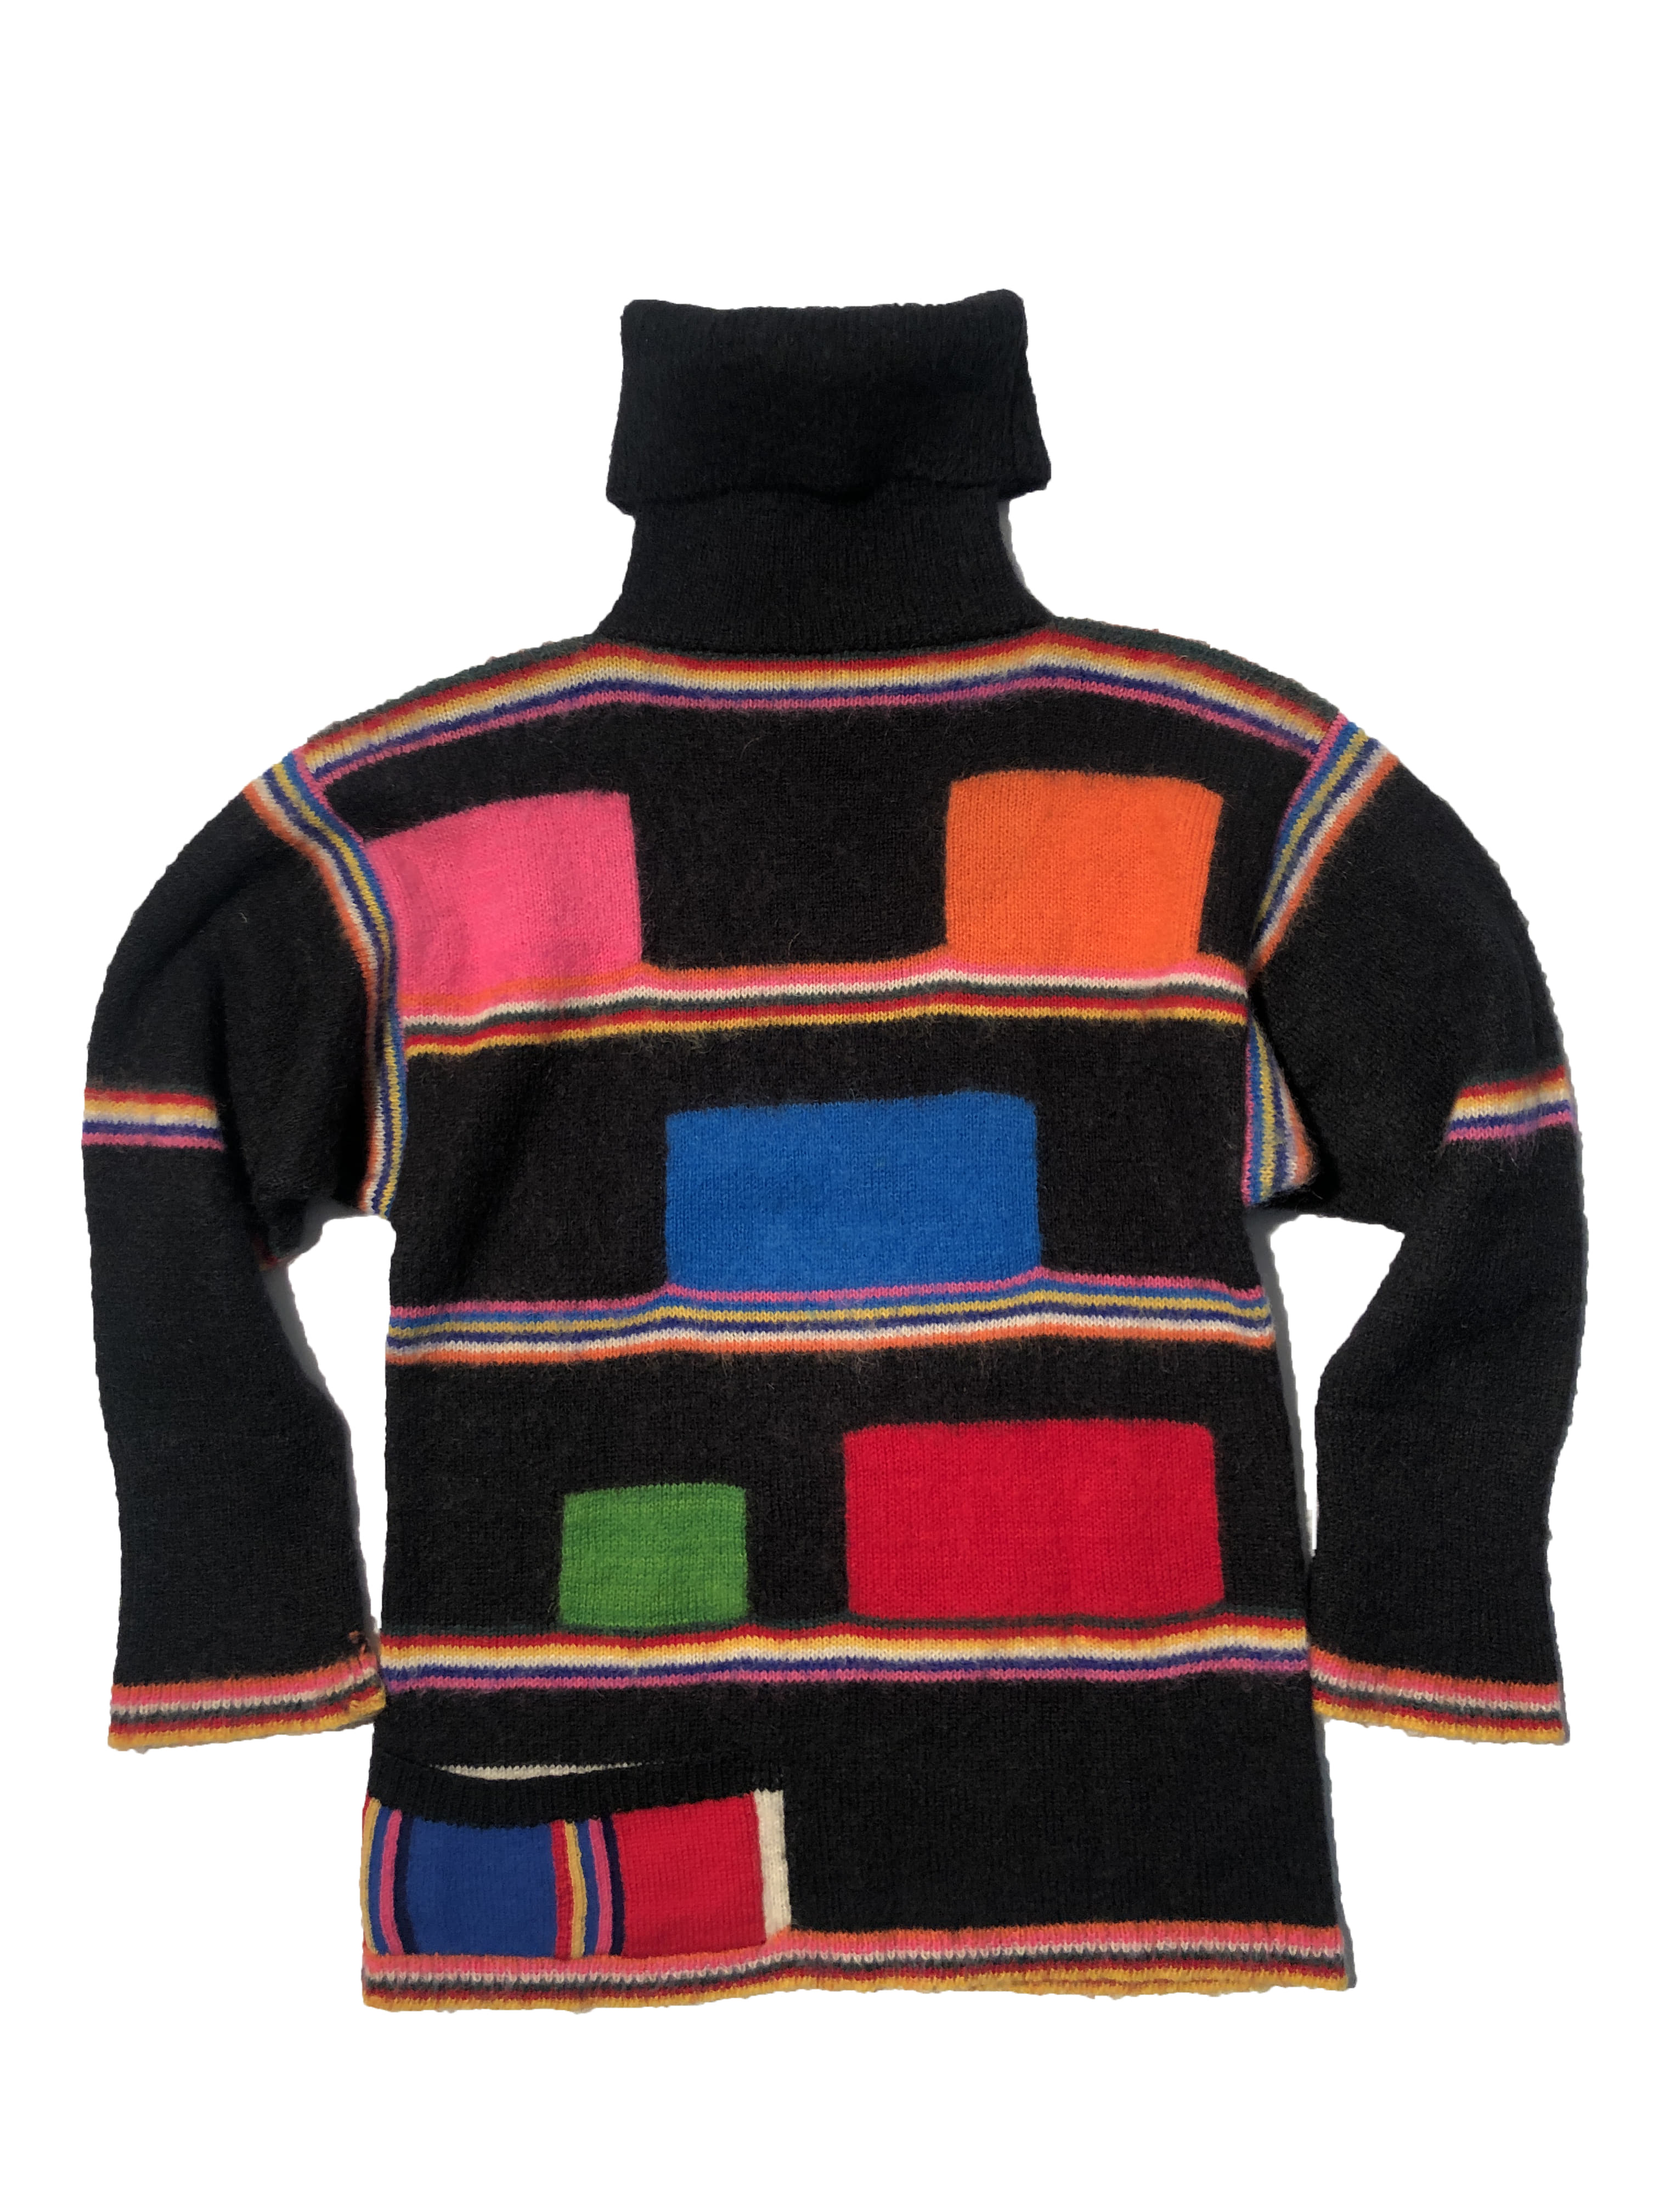 KANSAI YAMAMOTO 80s color blocked sweater